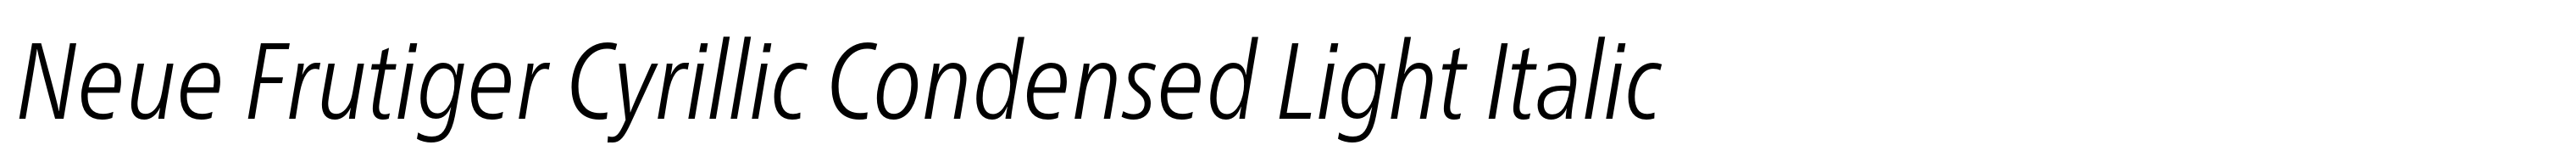 Neue Frutiger Cyrillic Condensed Light Italic